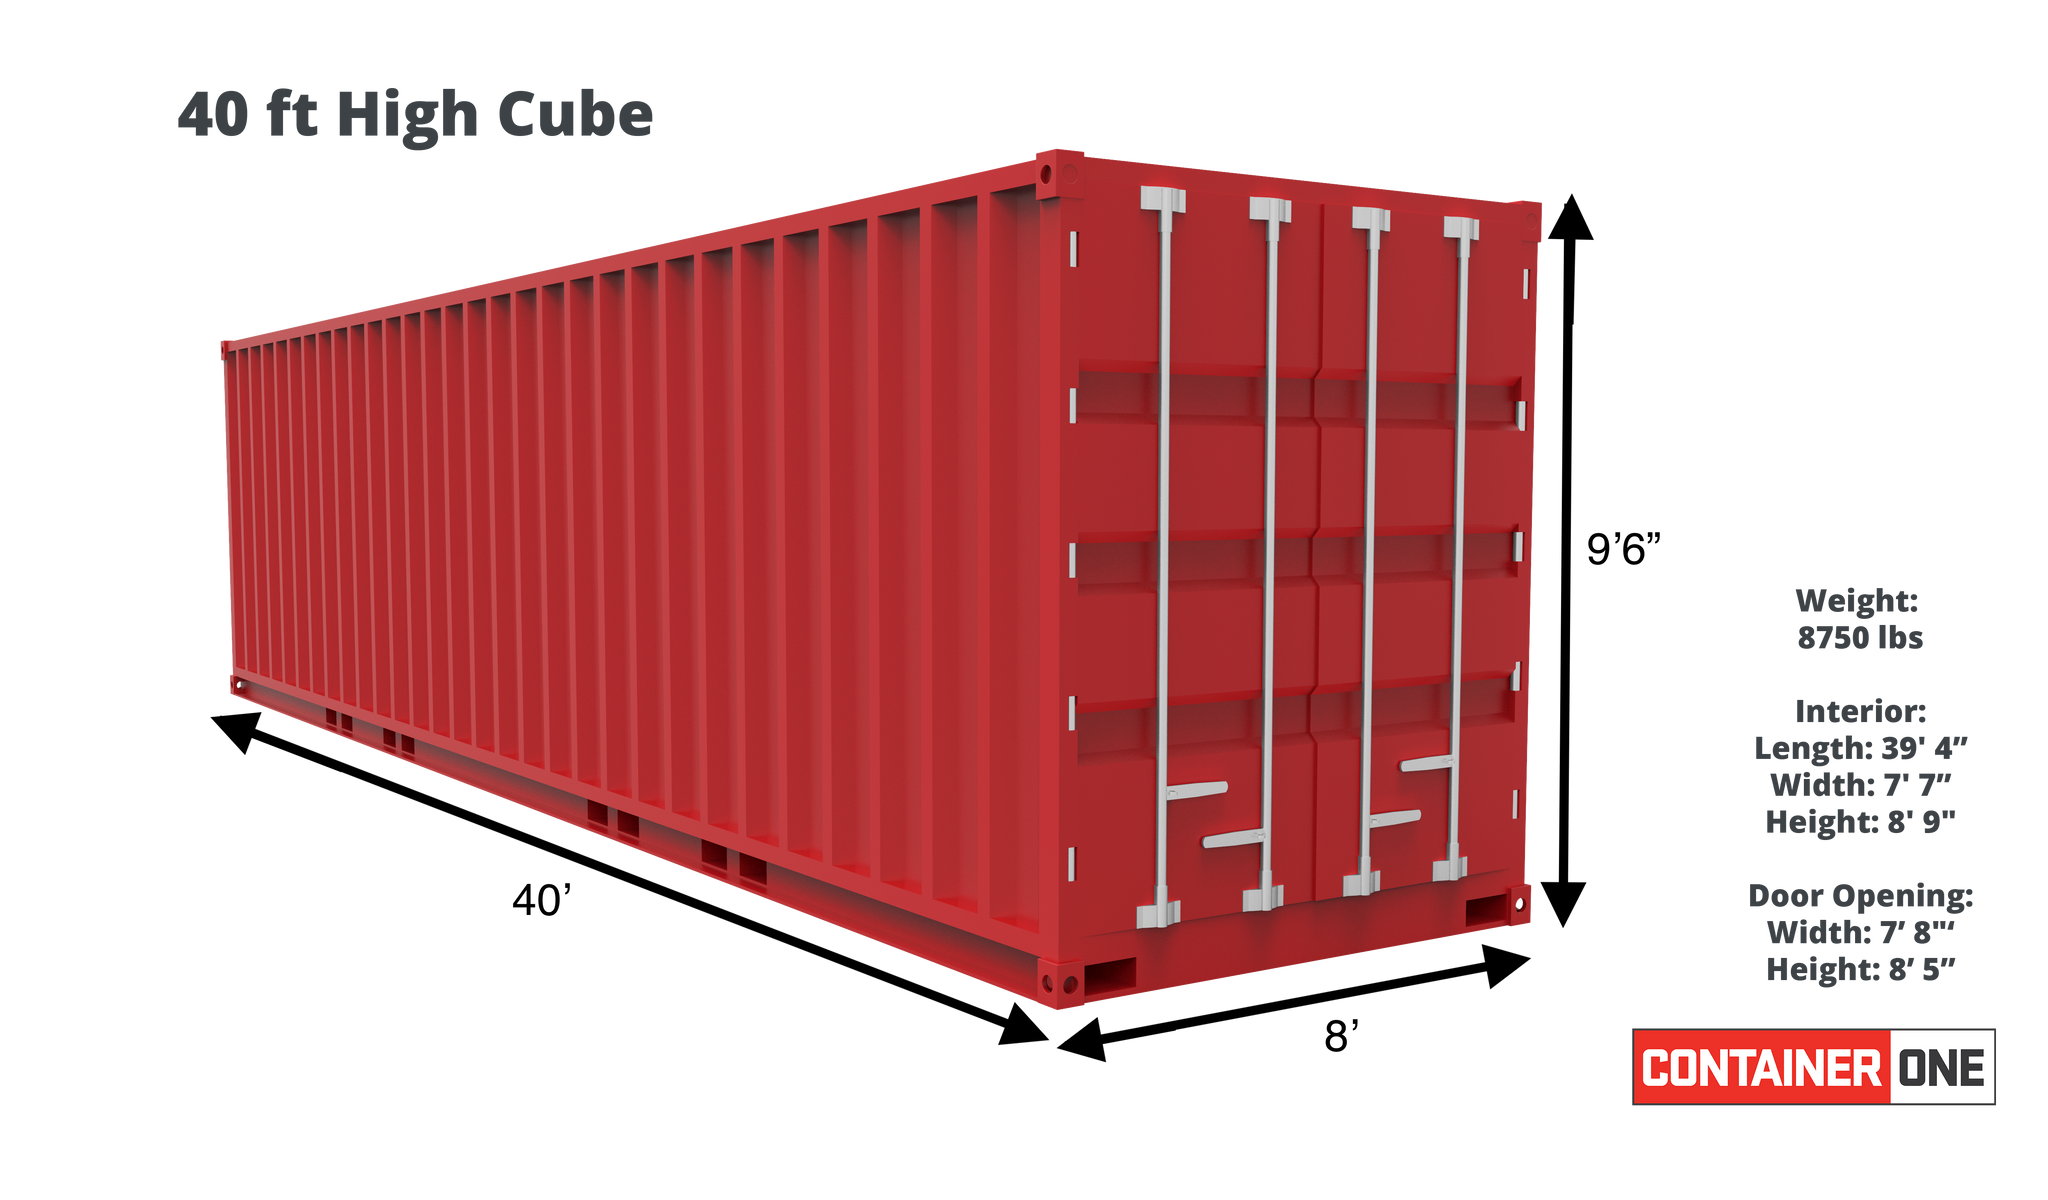 Контейнер 40 HC/hq (High Cube). 40 Футовый High Cube контейнер DC ISO. Габариты 20 футового контейнера High Cube. Габариты контейнера 40 футов High Cube. Отследить морской контейнер